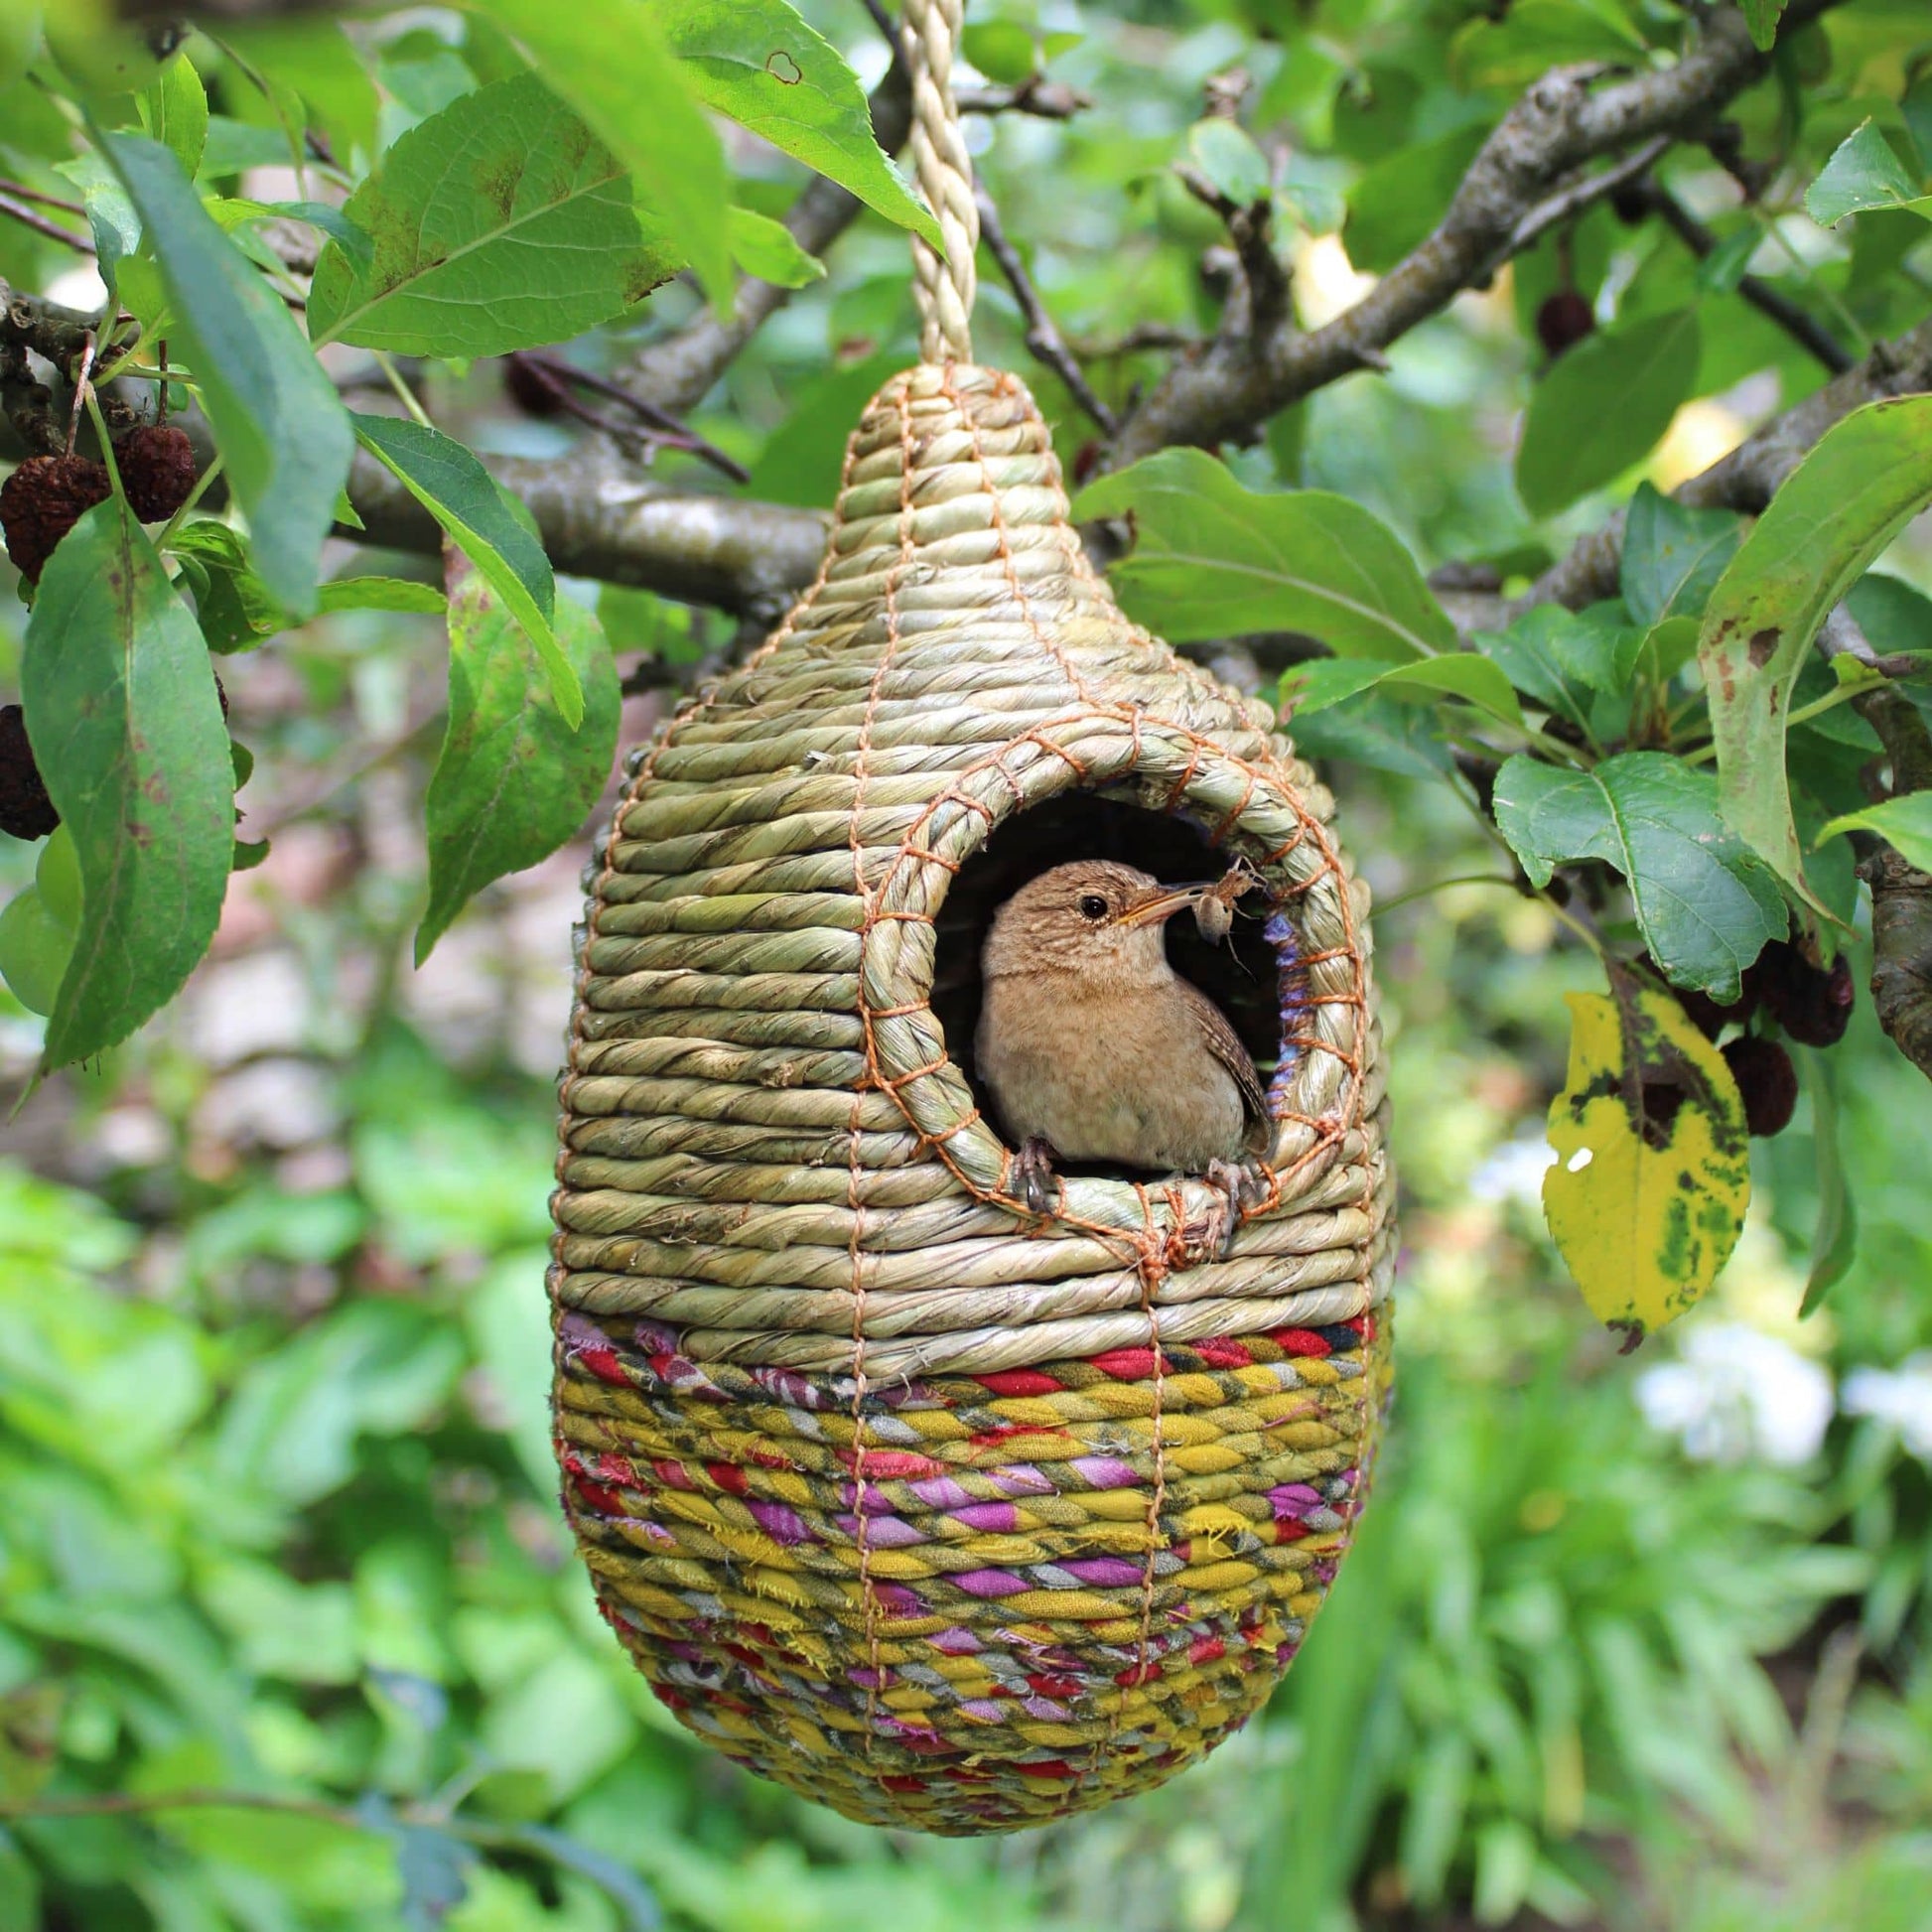 Handmade and Fair Trade Bird Nester - Sheshali - with bird perched on edge